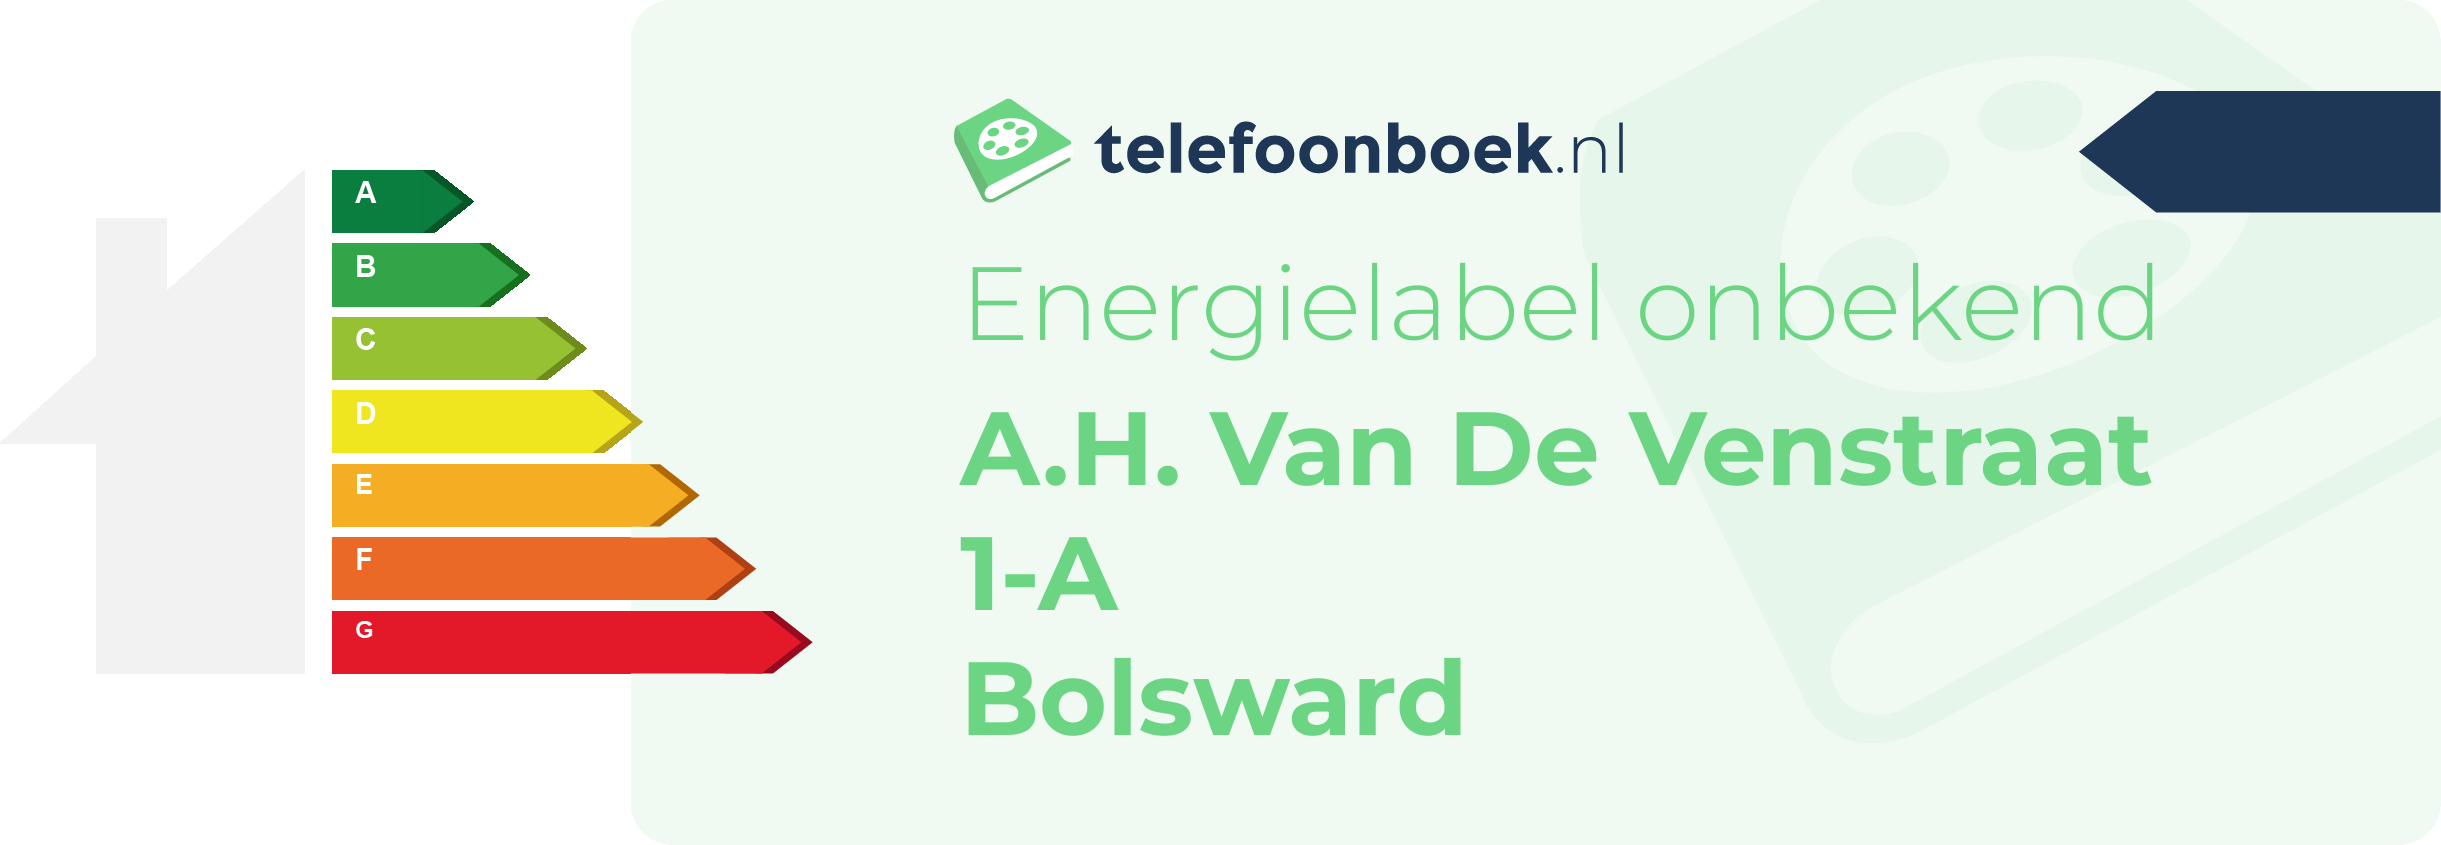 Energielabel A.H. Van De Venstraat 1-A Bolsward